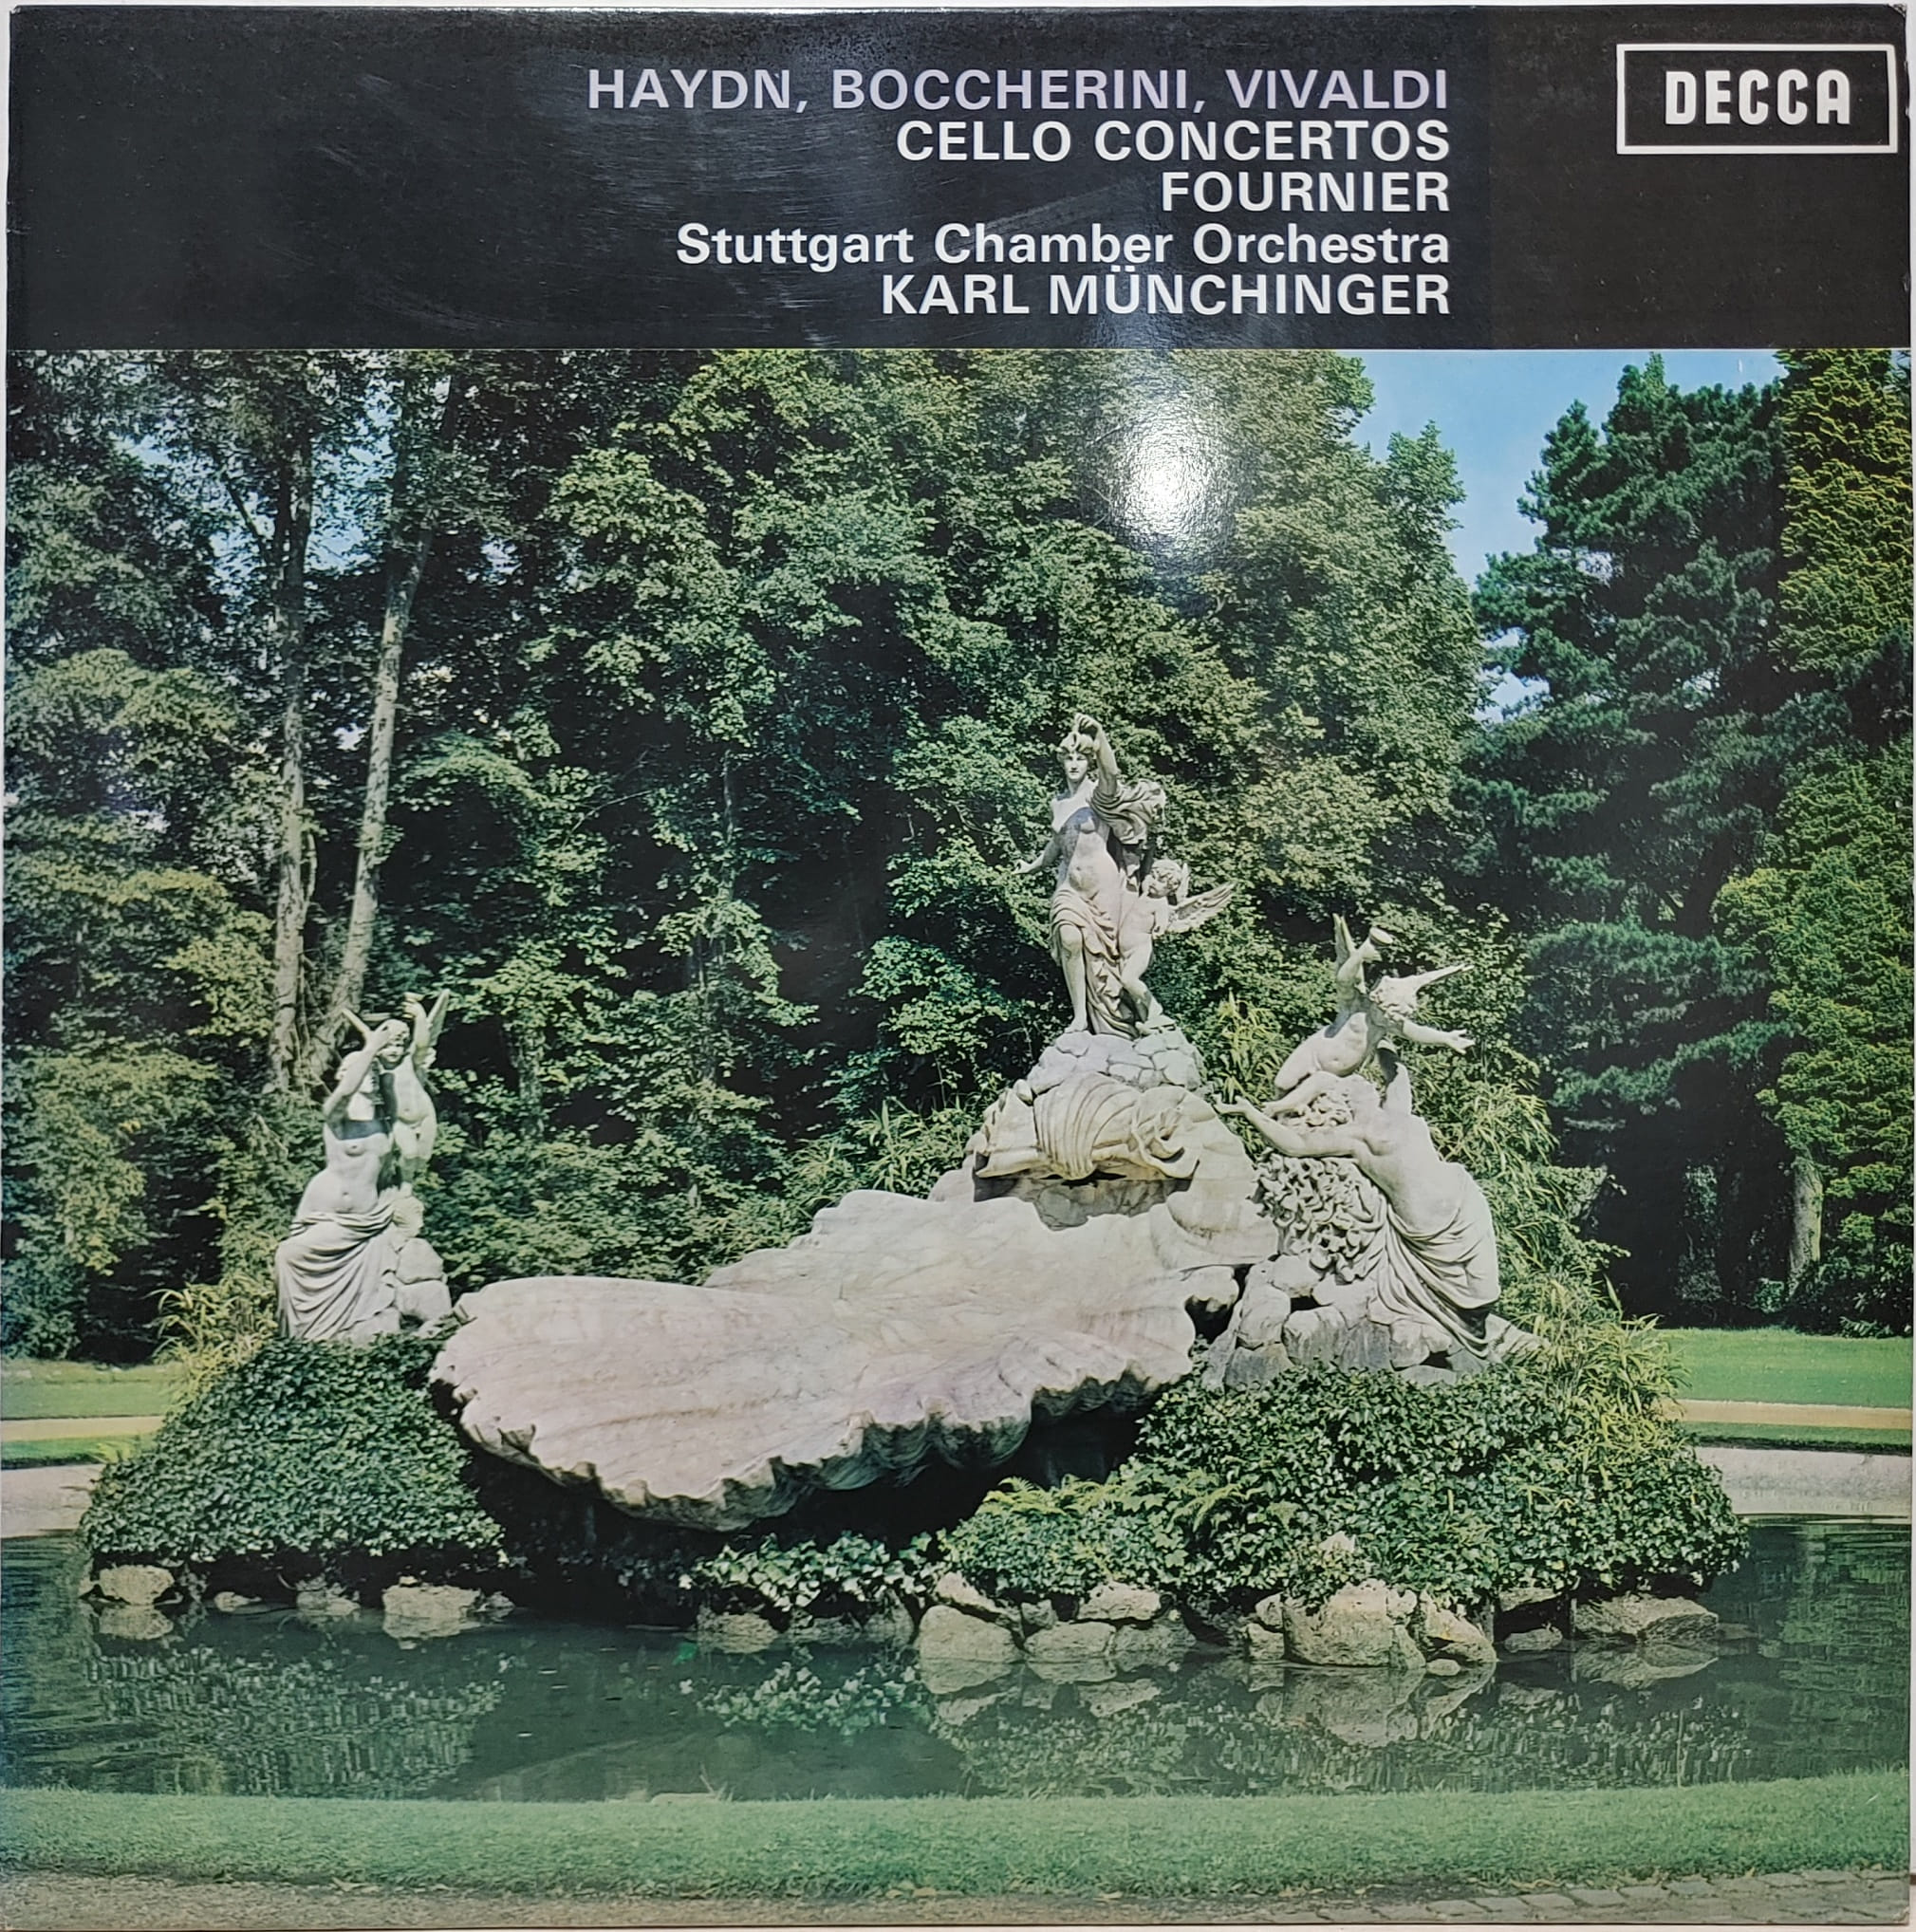 Haydn Boccherini Vivaldi / Cello Concertos Pierre Fournier